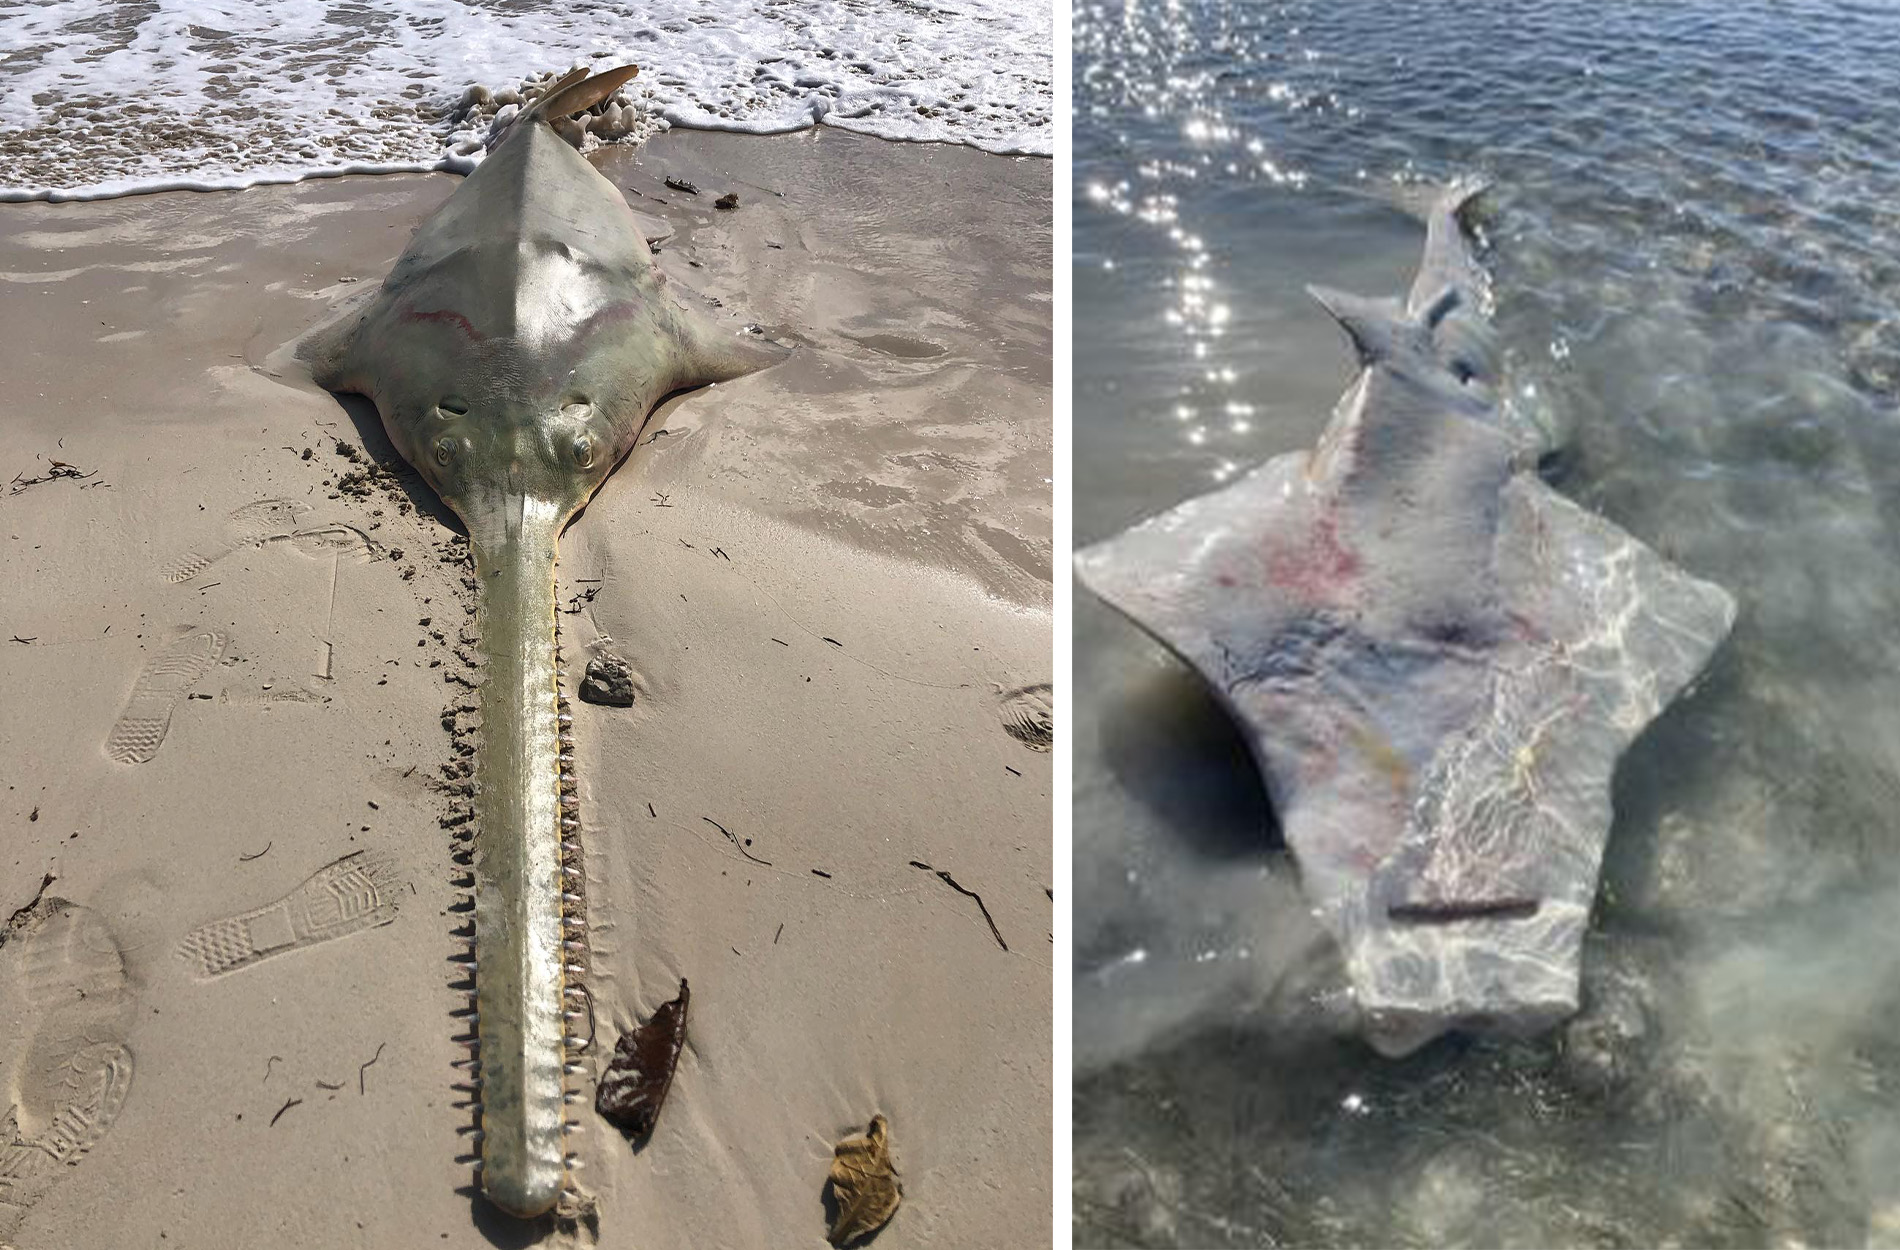 Two dead sawfish found dead in Florida.